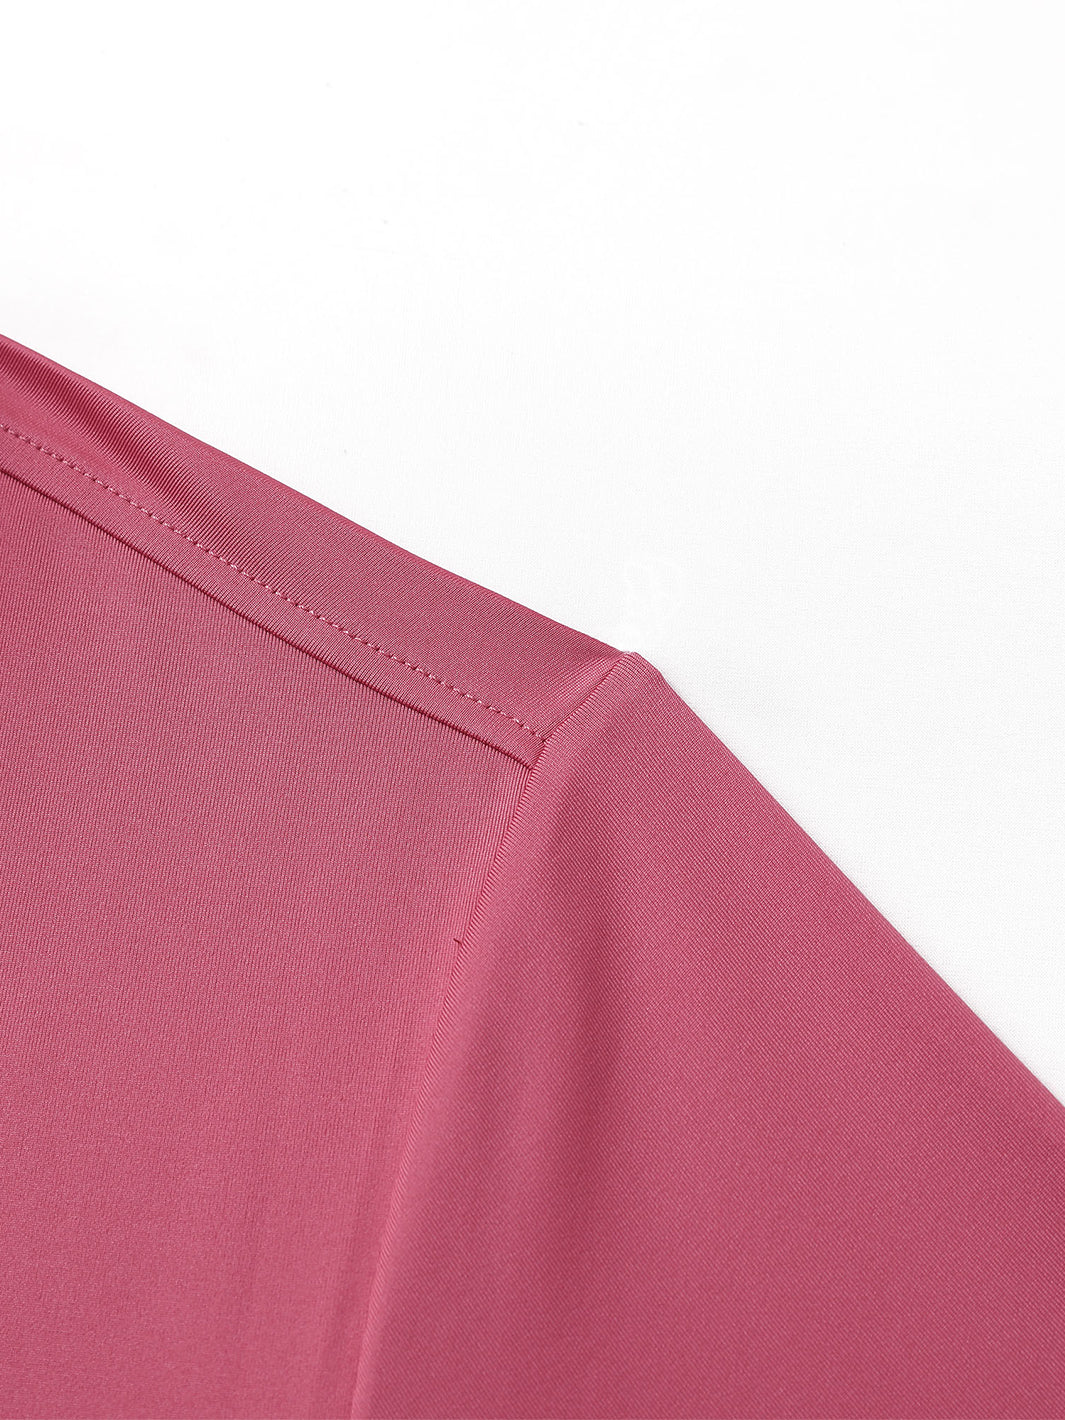 Men's Striped Print Golf Polo Shirts-Cranberry